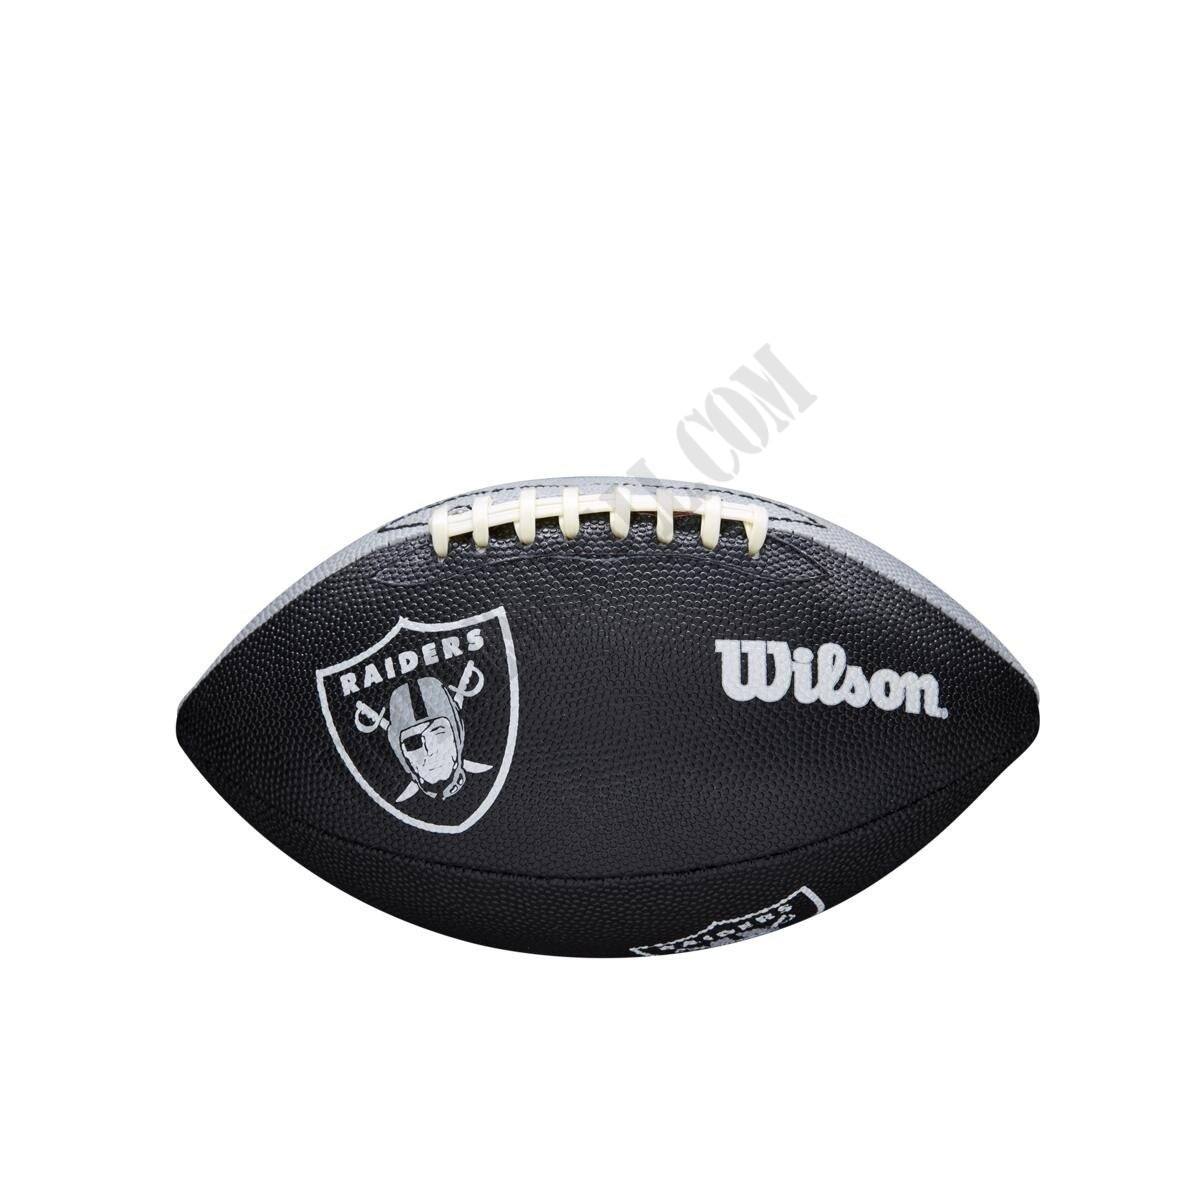 NFL Team Tailgate Football - Las Vegas Raiders - Wilson Discount Store - -2